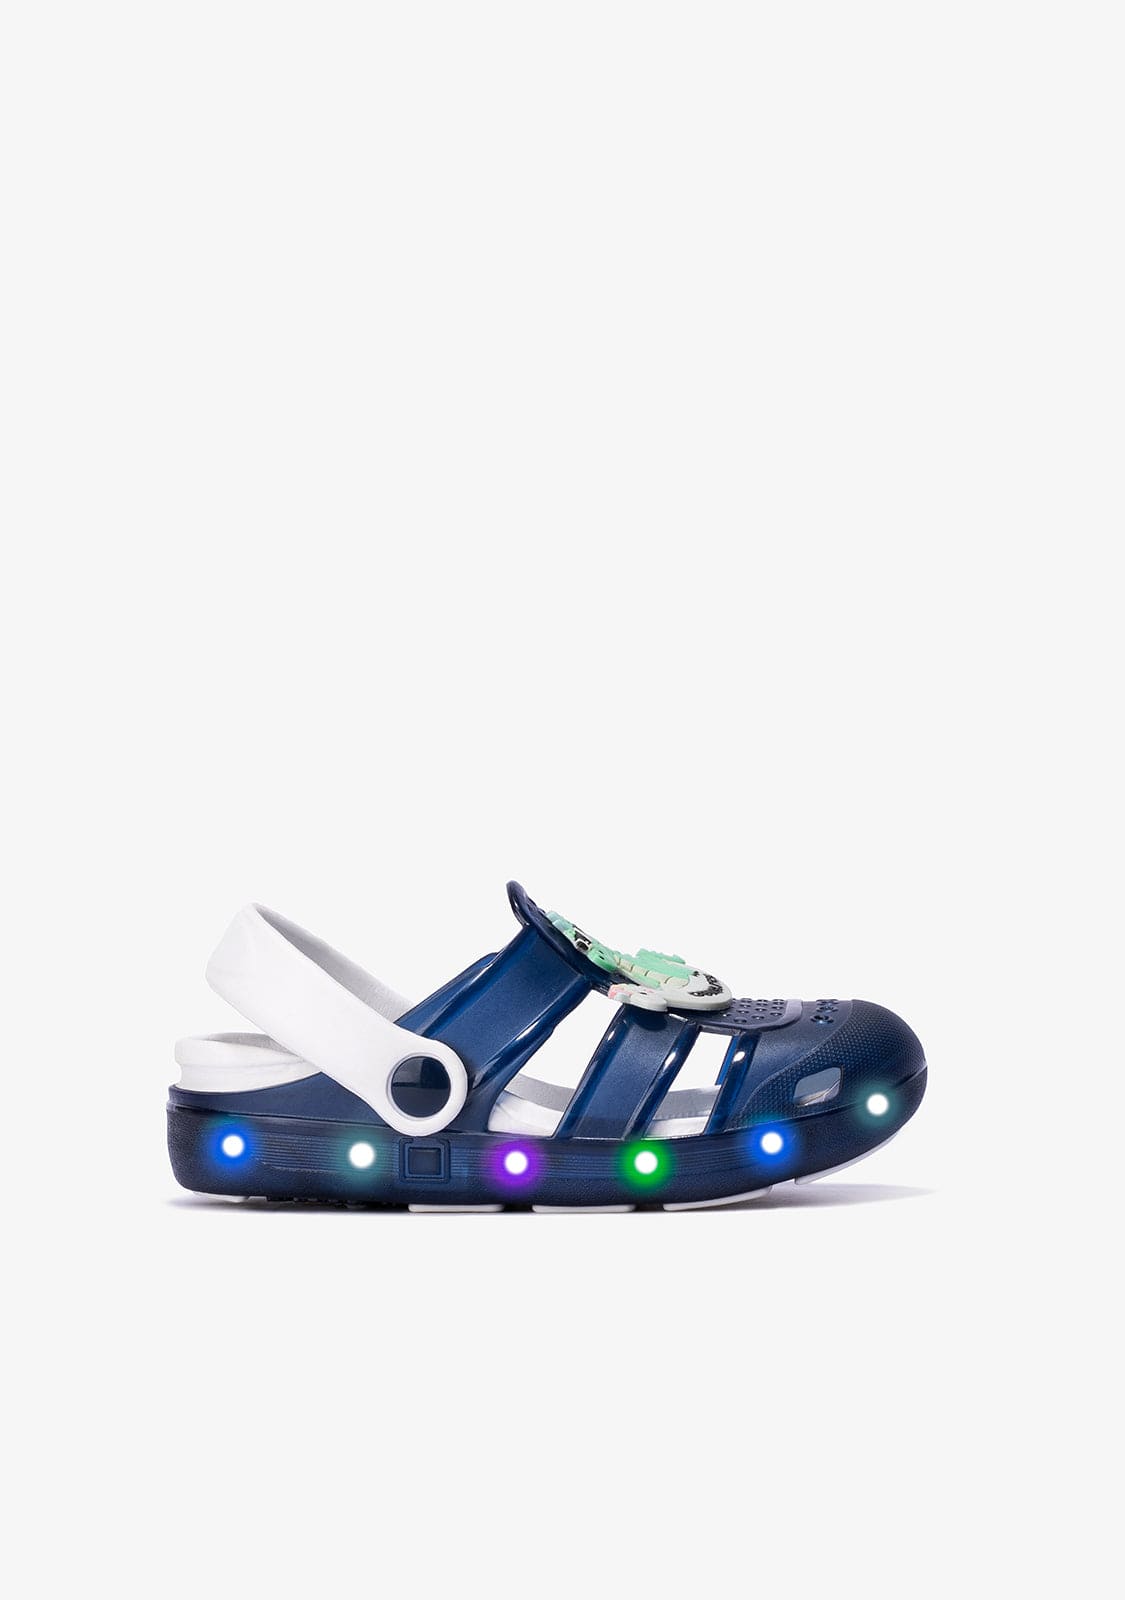 CONGUITOS Shoes Unisex Blue With Lights Clogs Rubber